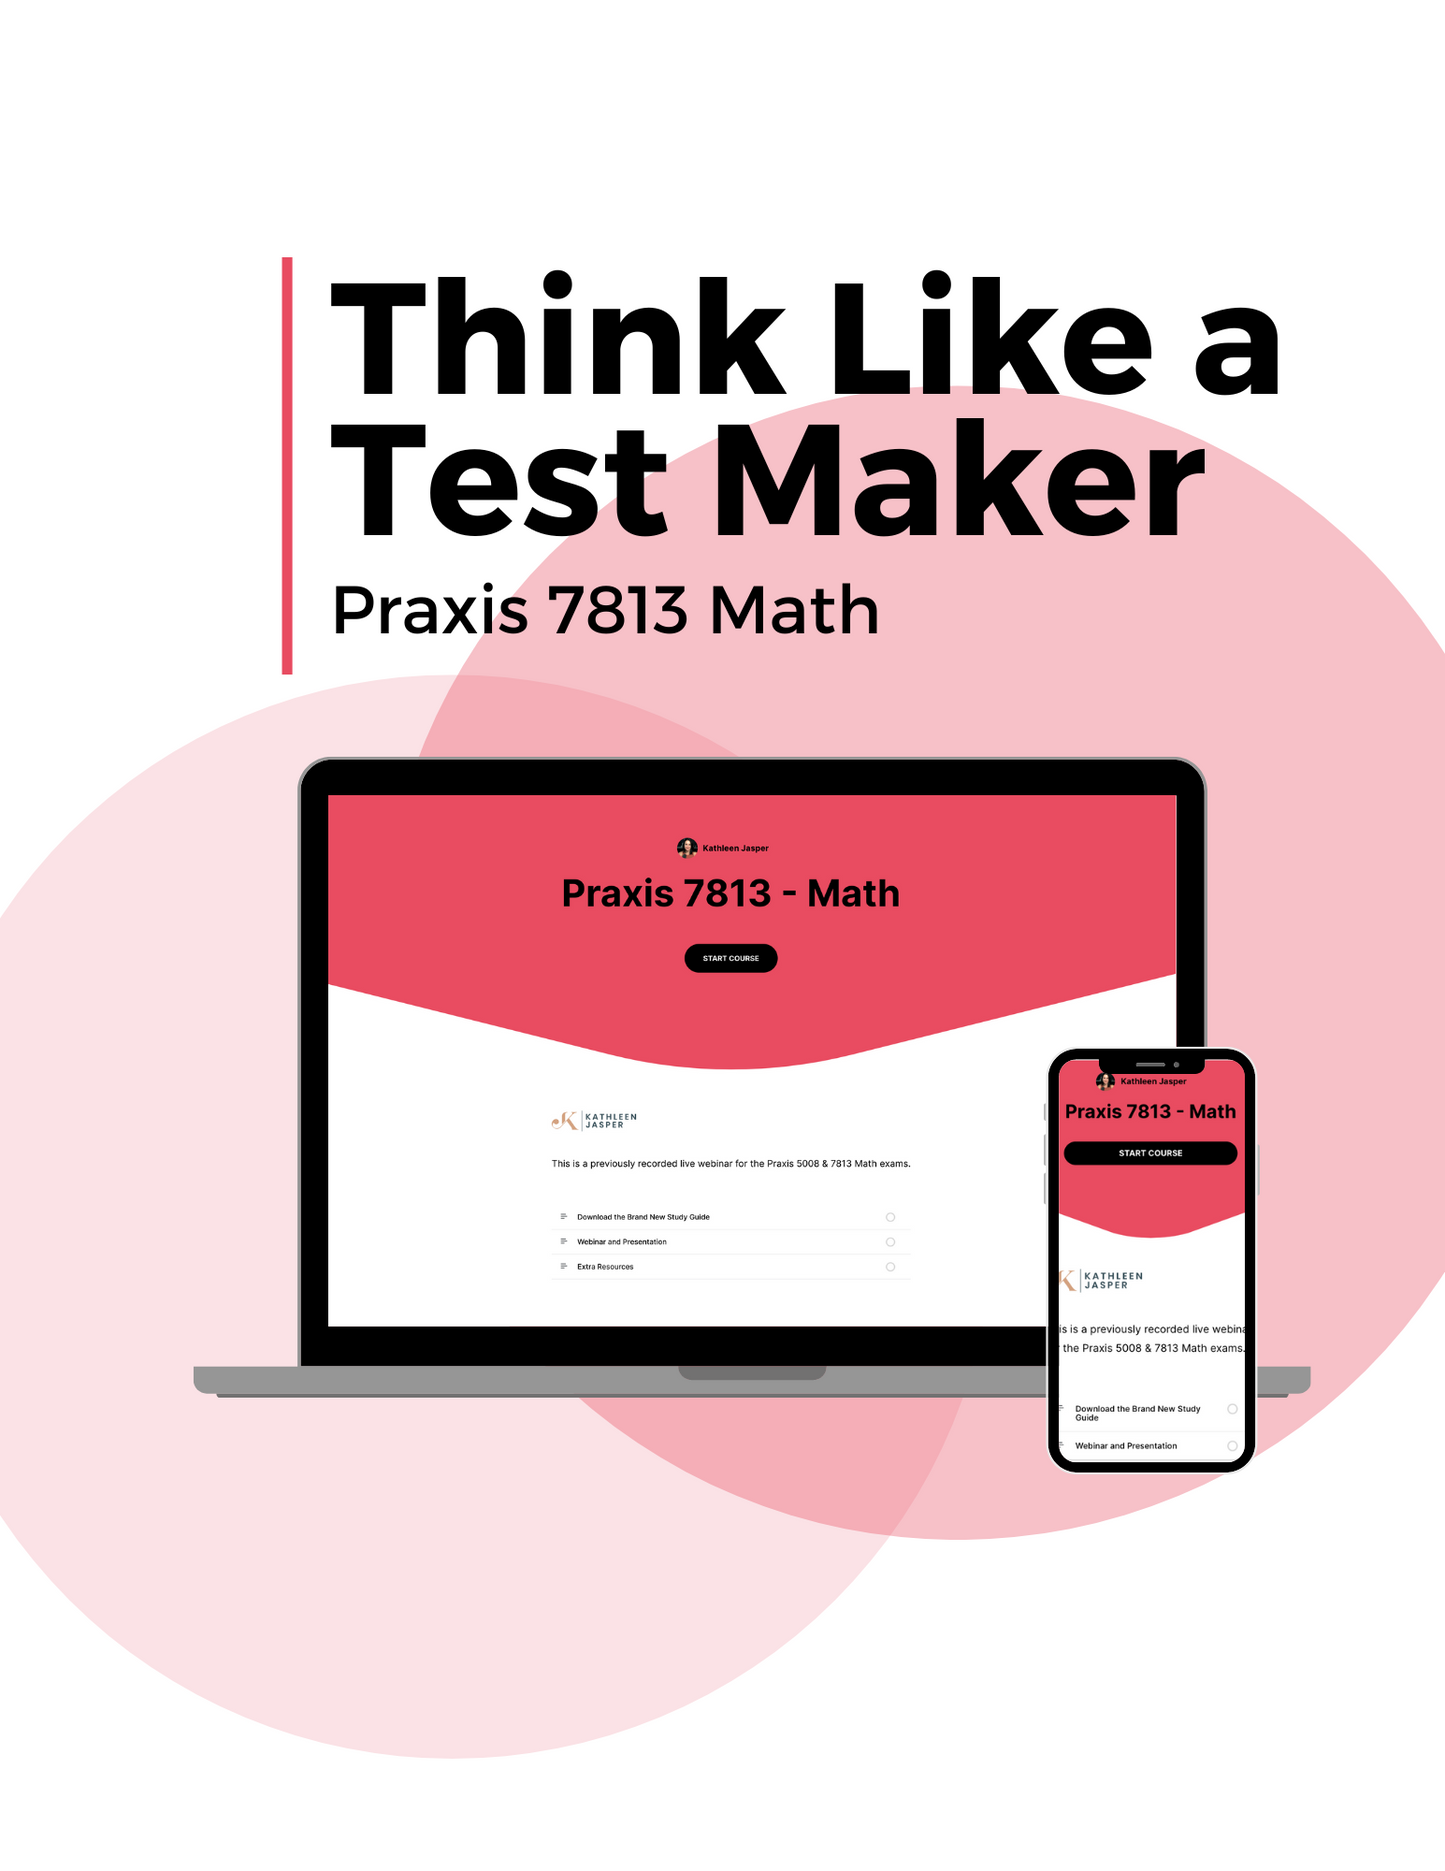 Praxis 7813 - MATH Online Course